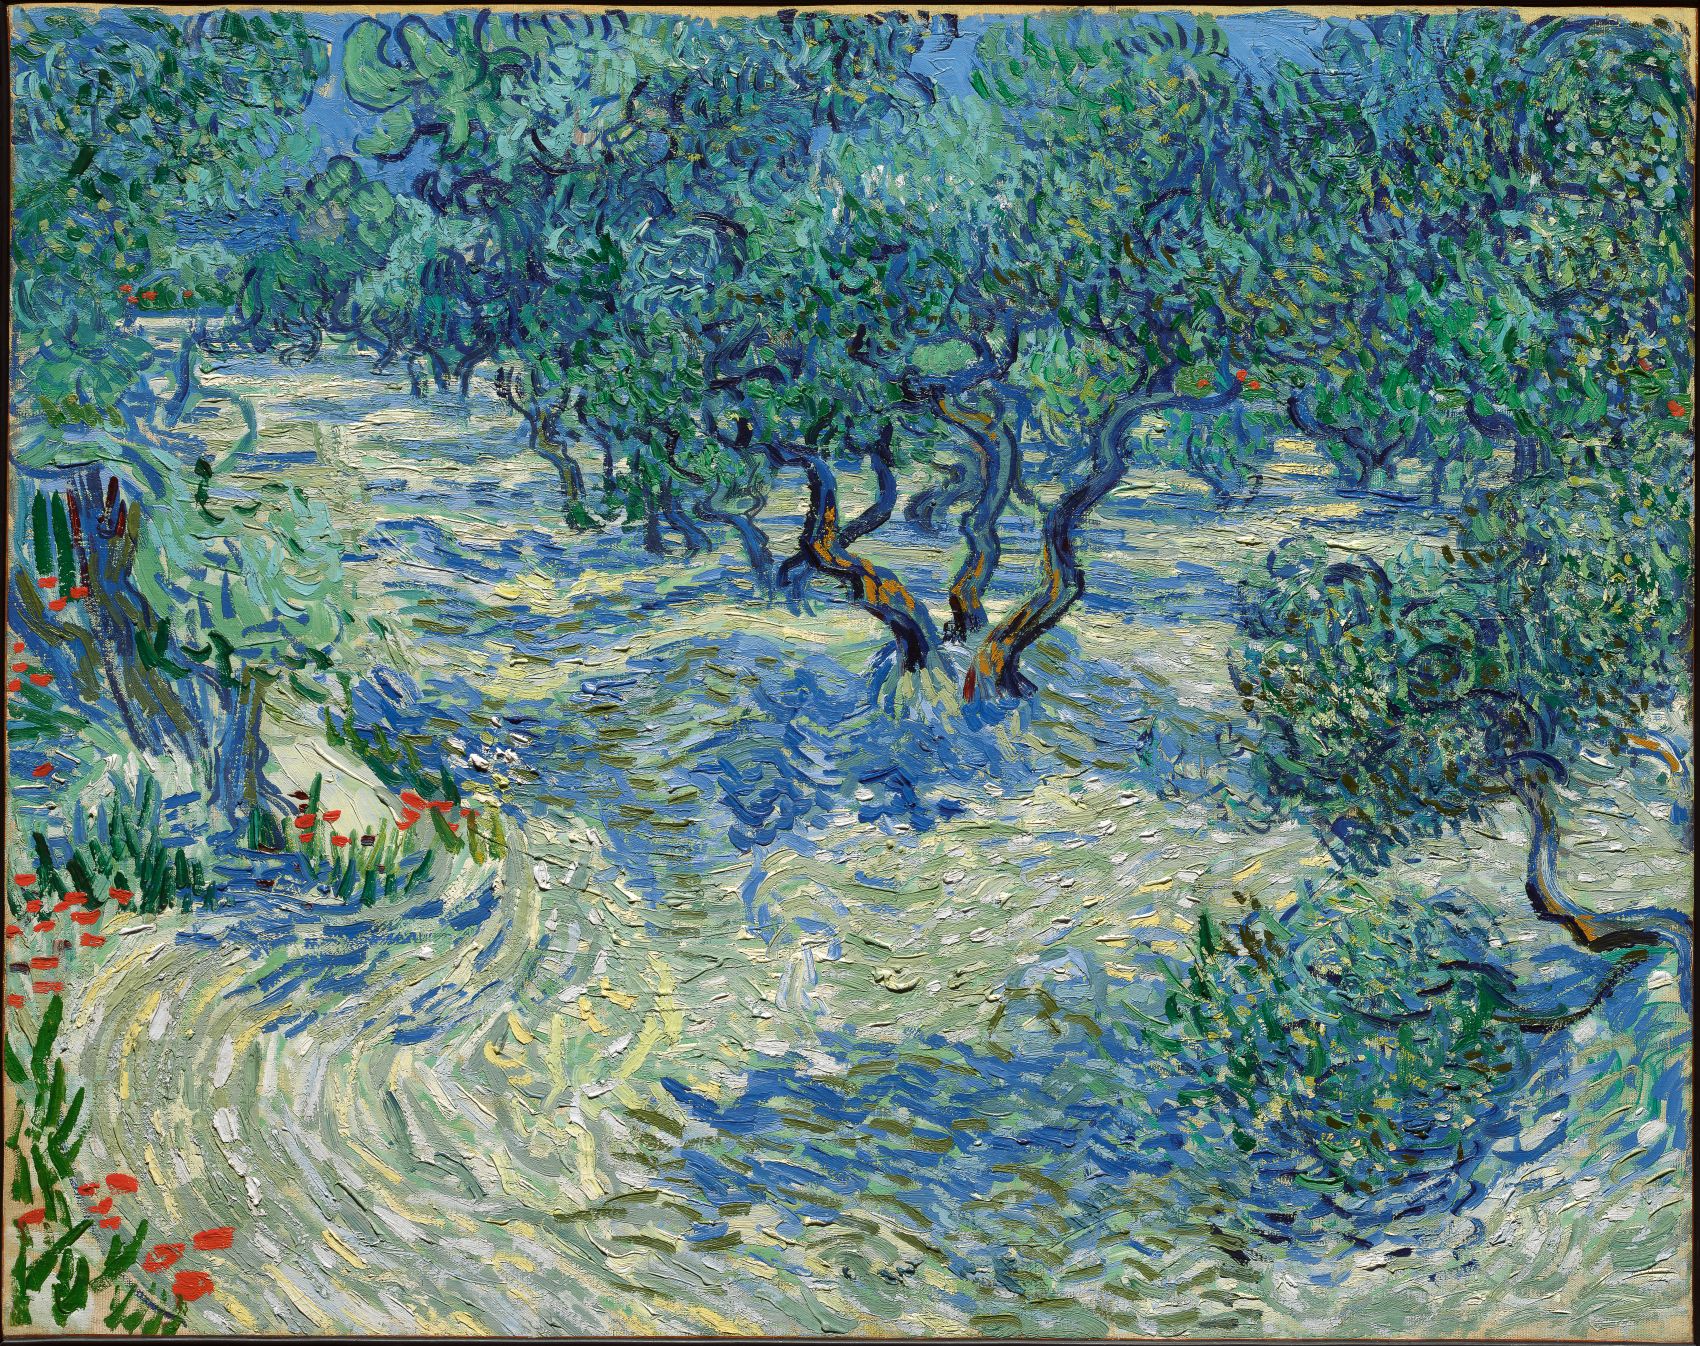 橄欖樹 by Vincent van Gogh - 1889年 - 73.2 × 92.2 釐米 